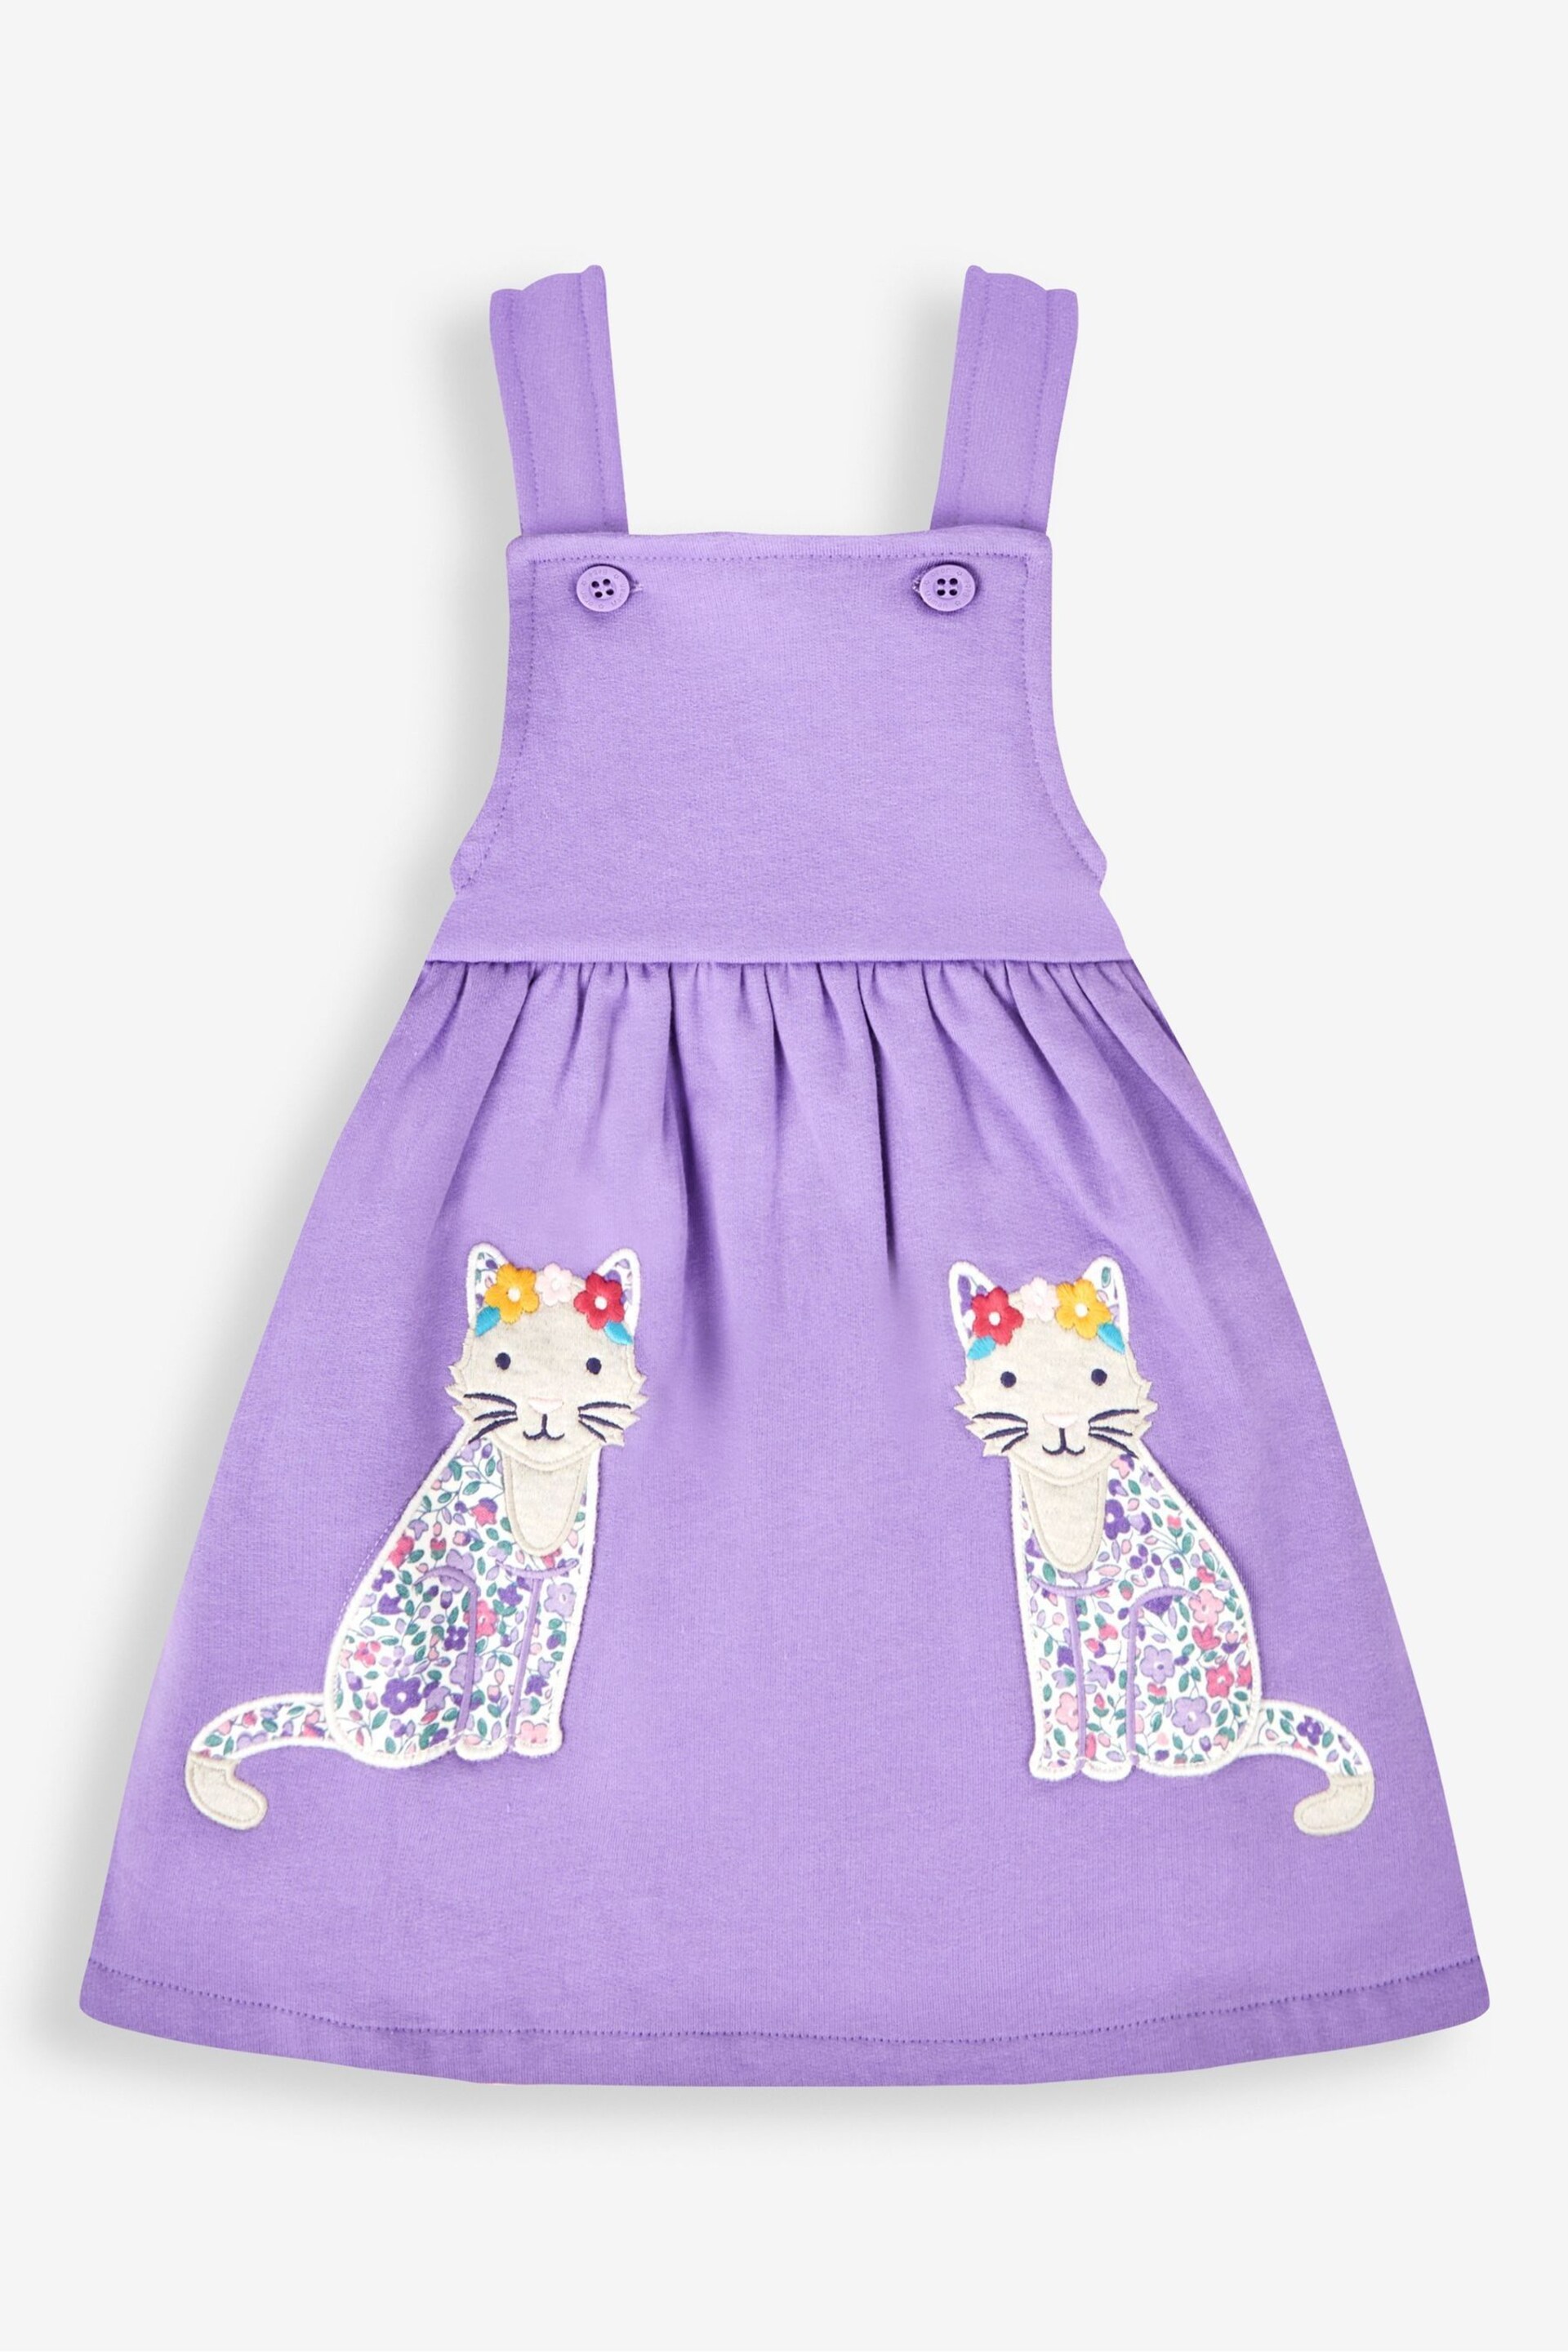 JoJo Maman Bébé Lilac Purple Cat Girls' 2-Piece Appliqué Pinafore Dress & Top Set - Image 2 of 6